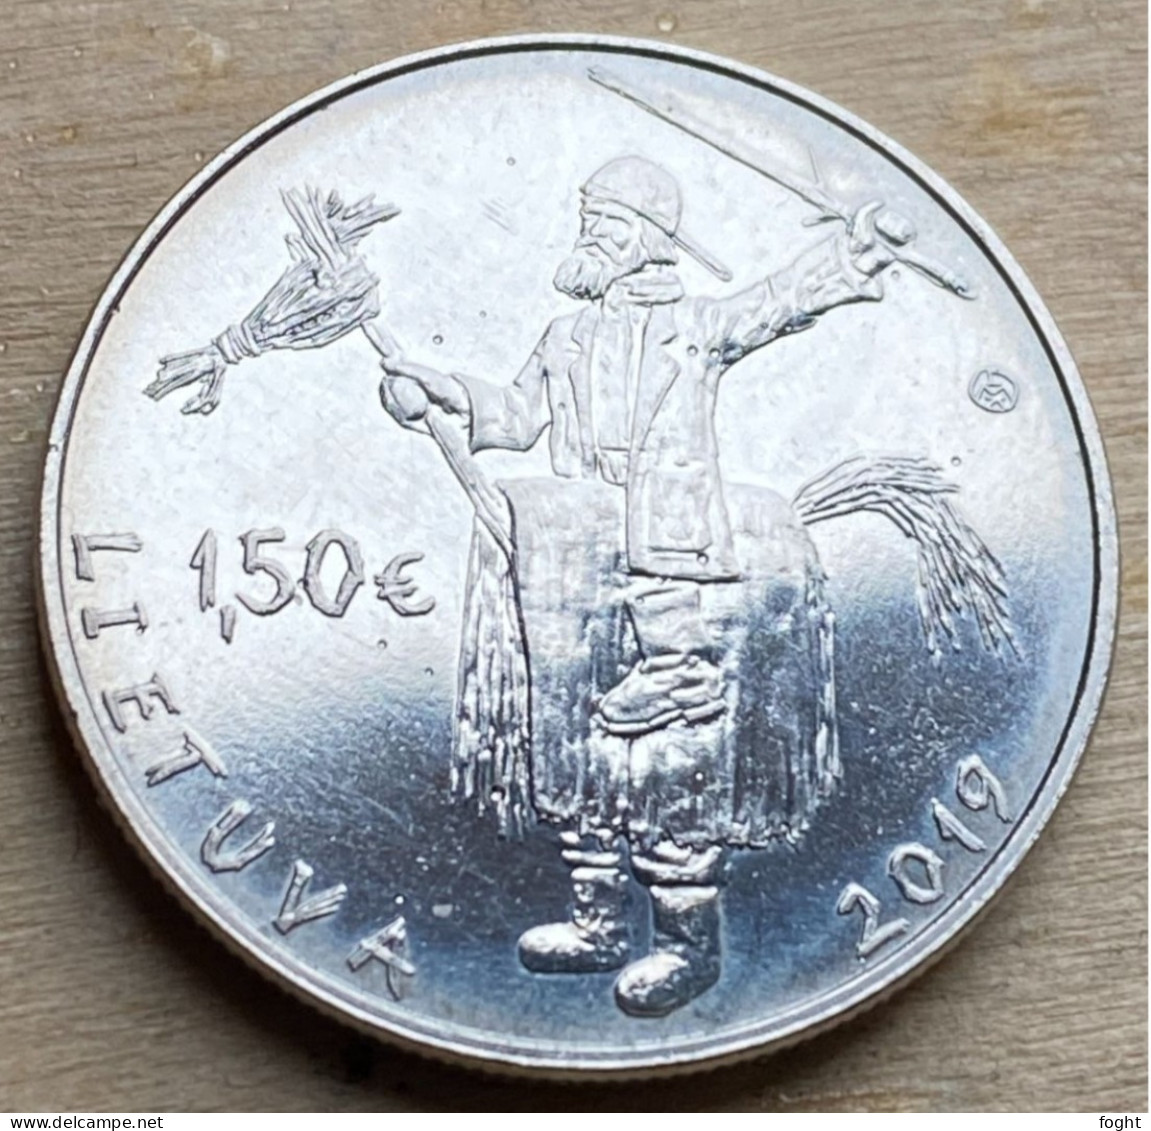 2019 LMK Lithuania "Traditional Lithuanian Celebrations" 1.5 Euro Coin,KM#234,7119 - Litauen